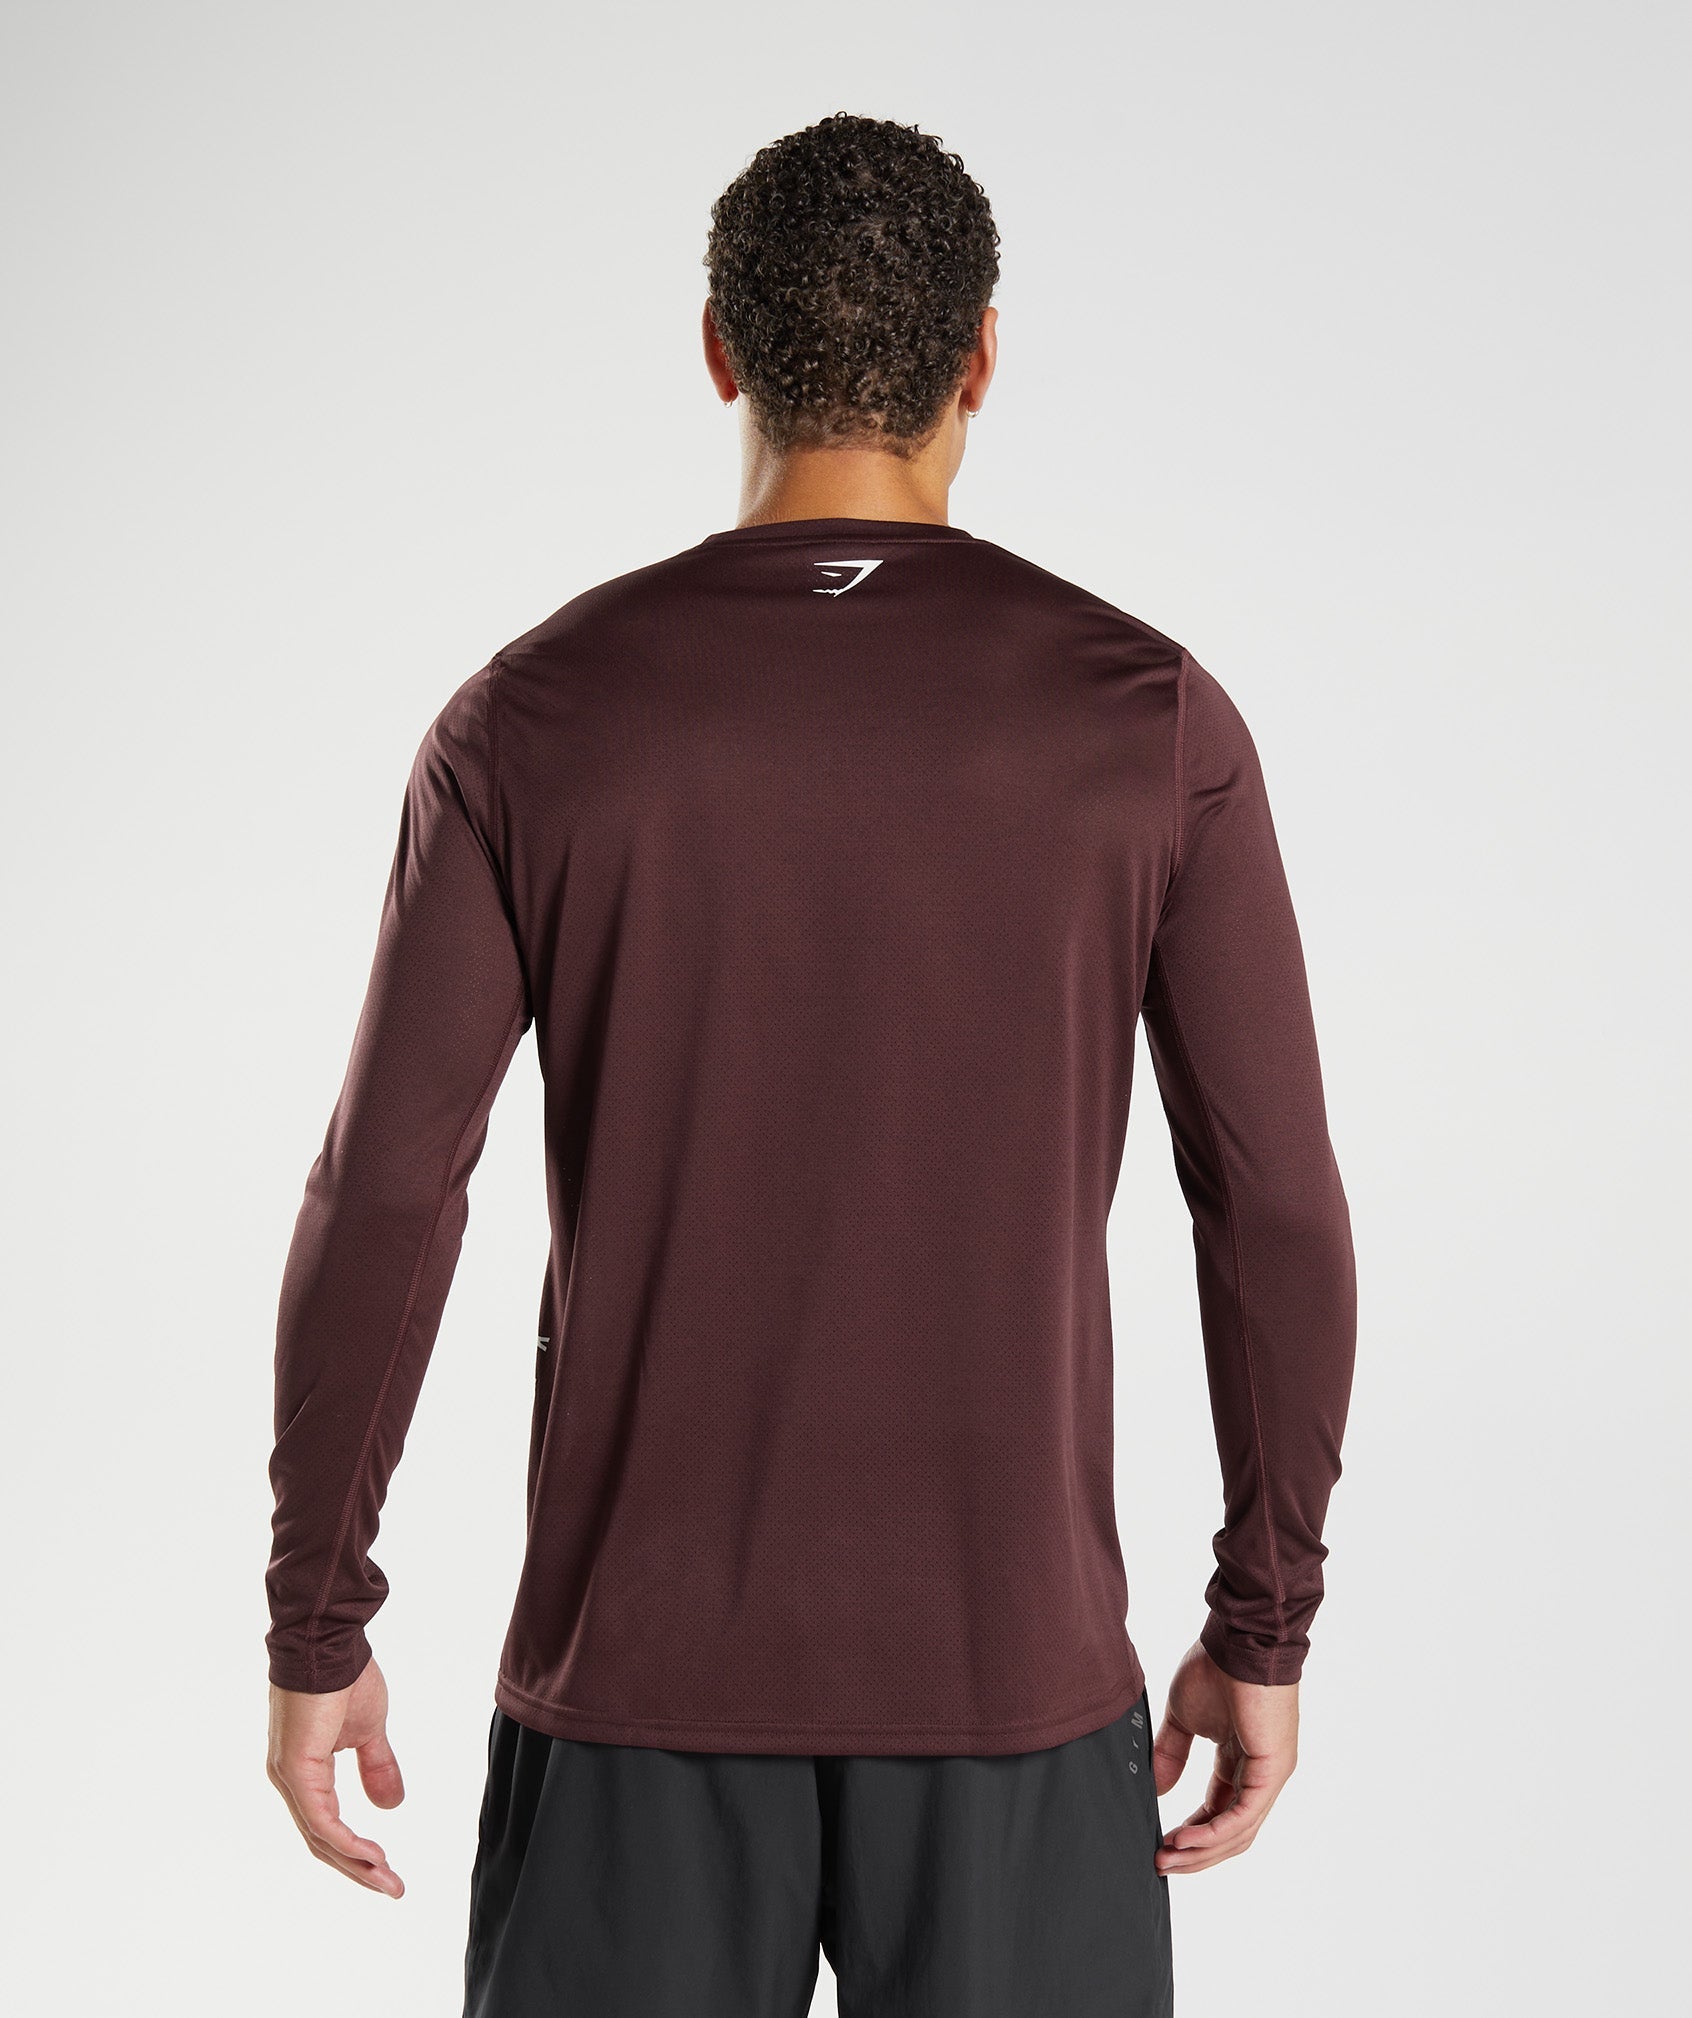 Gymshark Sport Long Sleeve T-shirts Herren Bordeaux Schwarz | 1423605-MZ